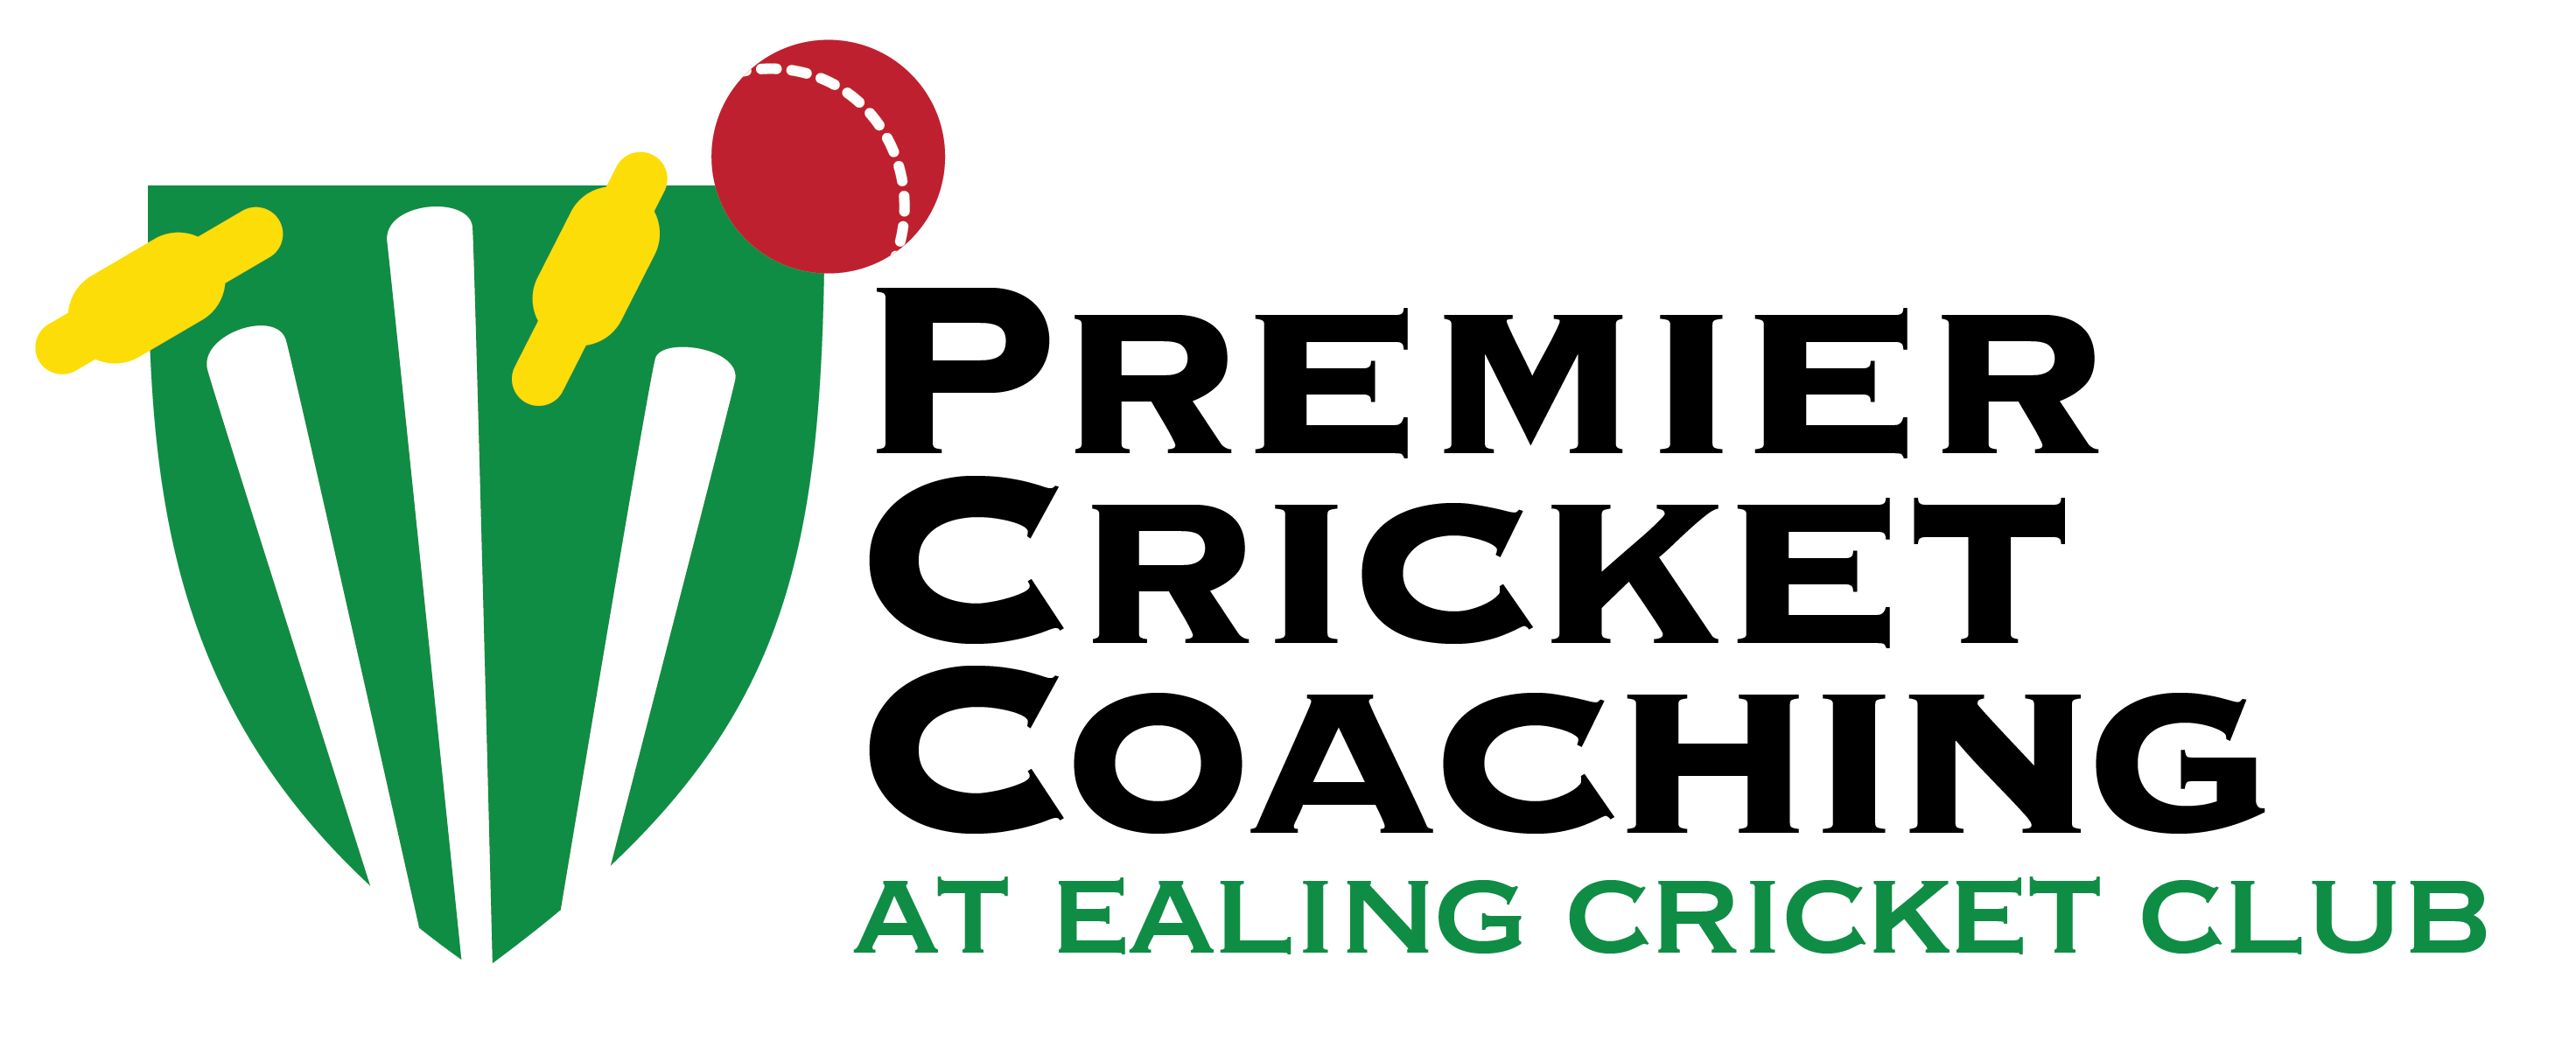 Ealing Cricket Club Logo